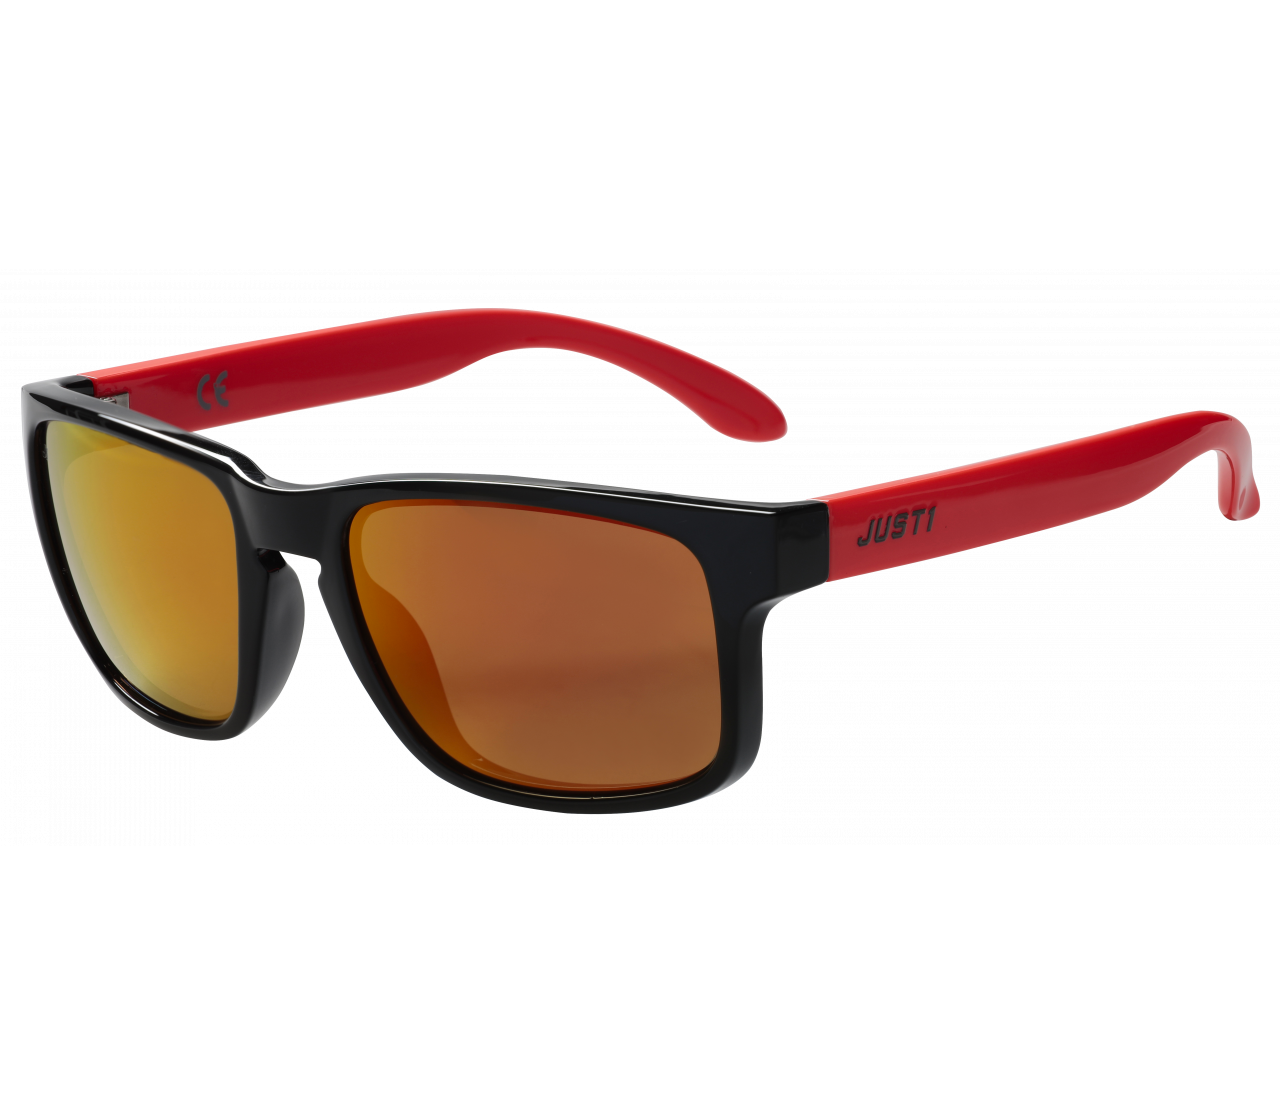 Kickflip Orange-Black with Mirror Red Lens